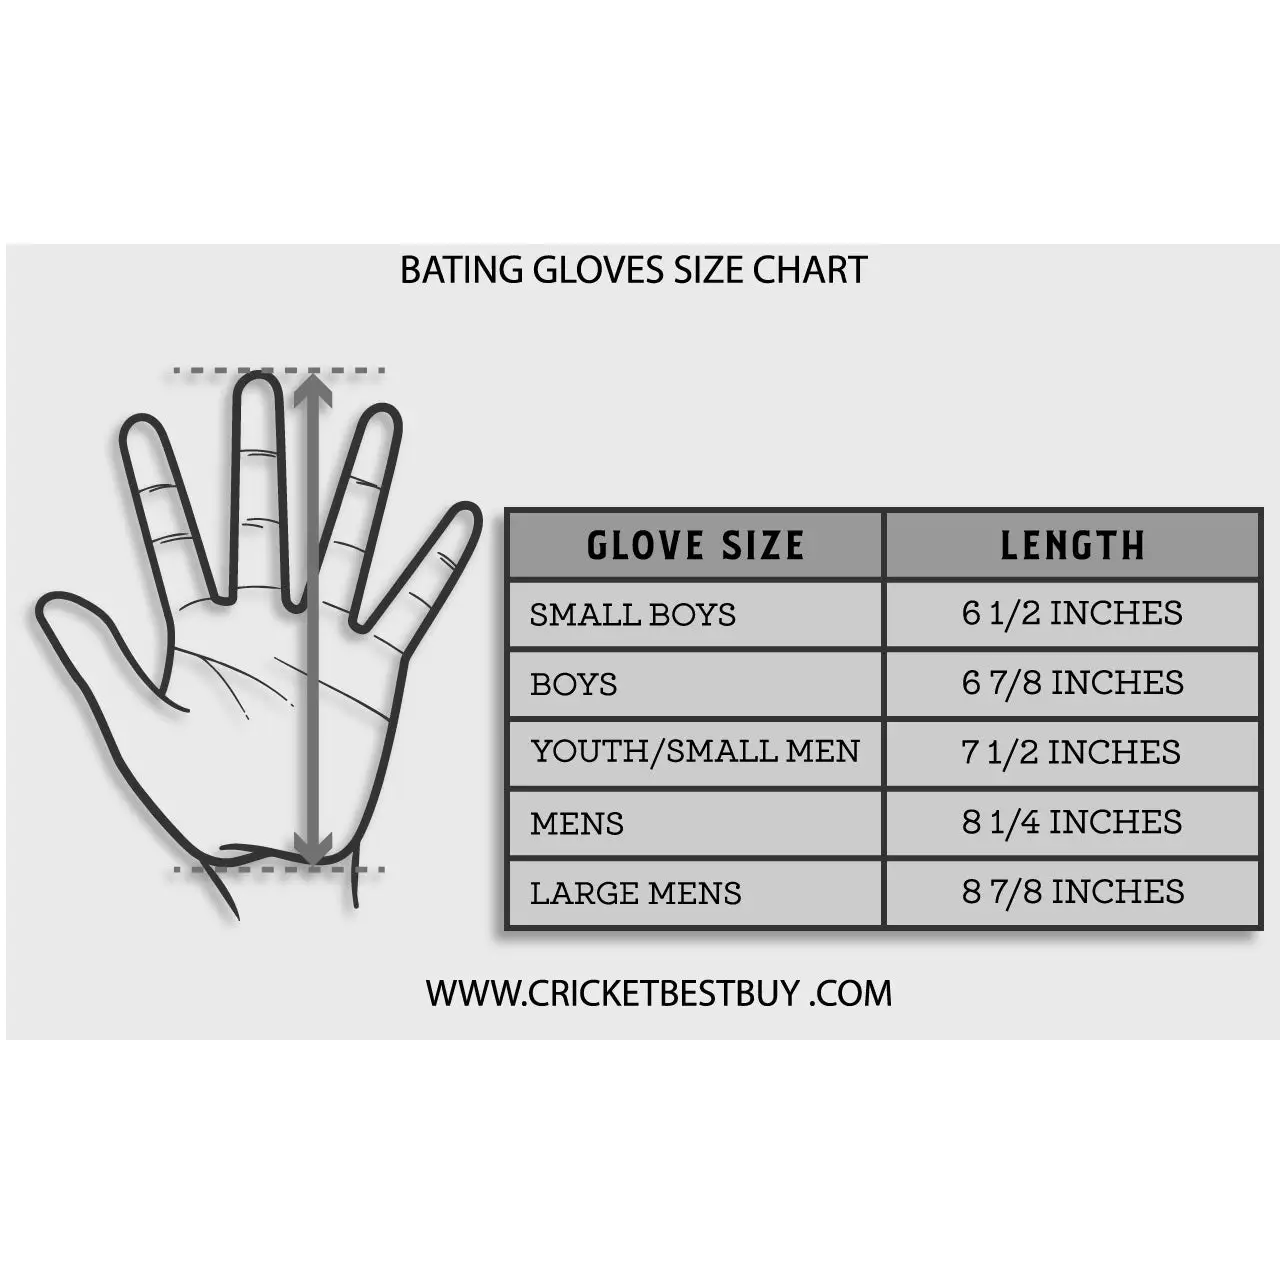 SS TON Super Cricket Batting Gloves- Premium Quality Leather - GLOVE - BATTING